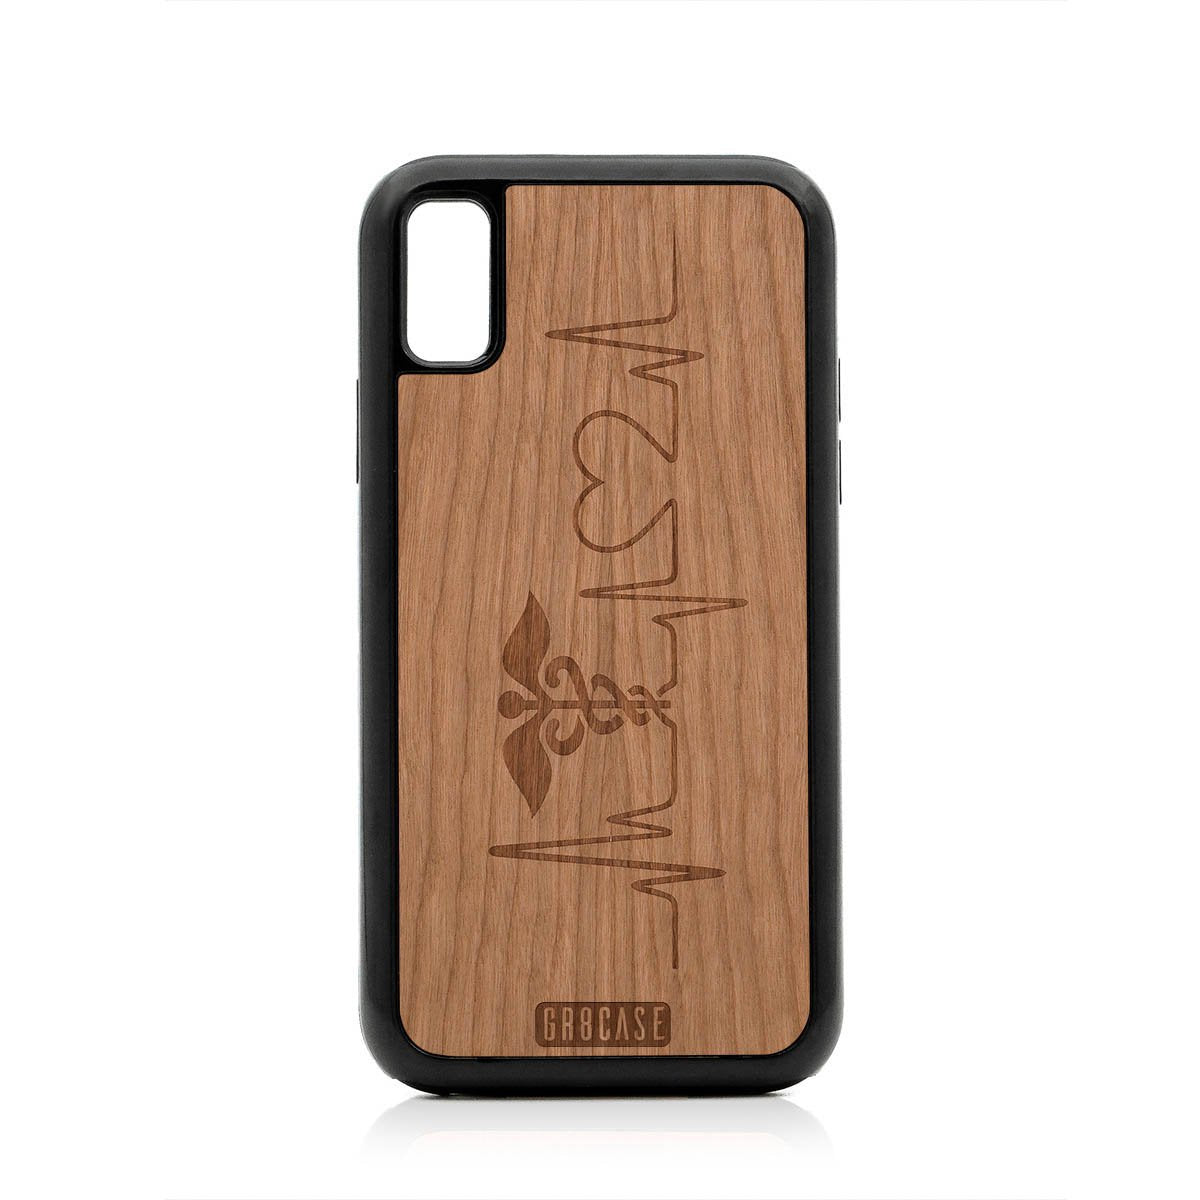 Hero's Heart (Nurse, Doctor) Design Wood Case For iPhone XR by GR8CASE